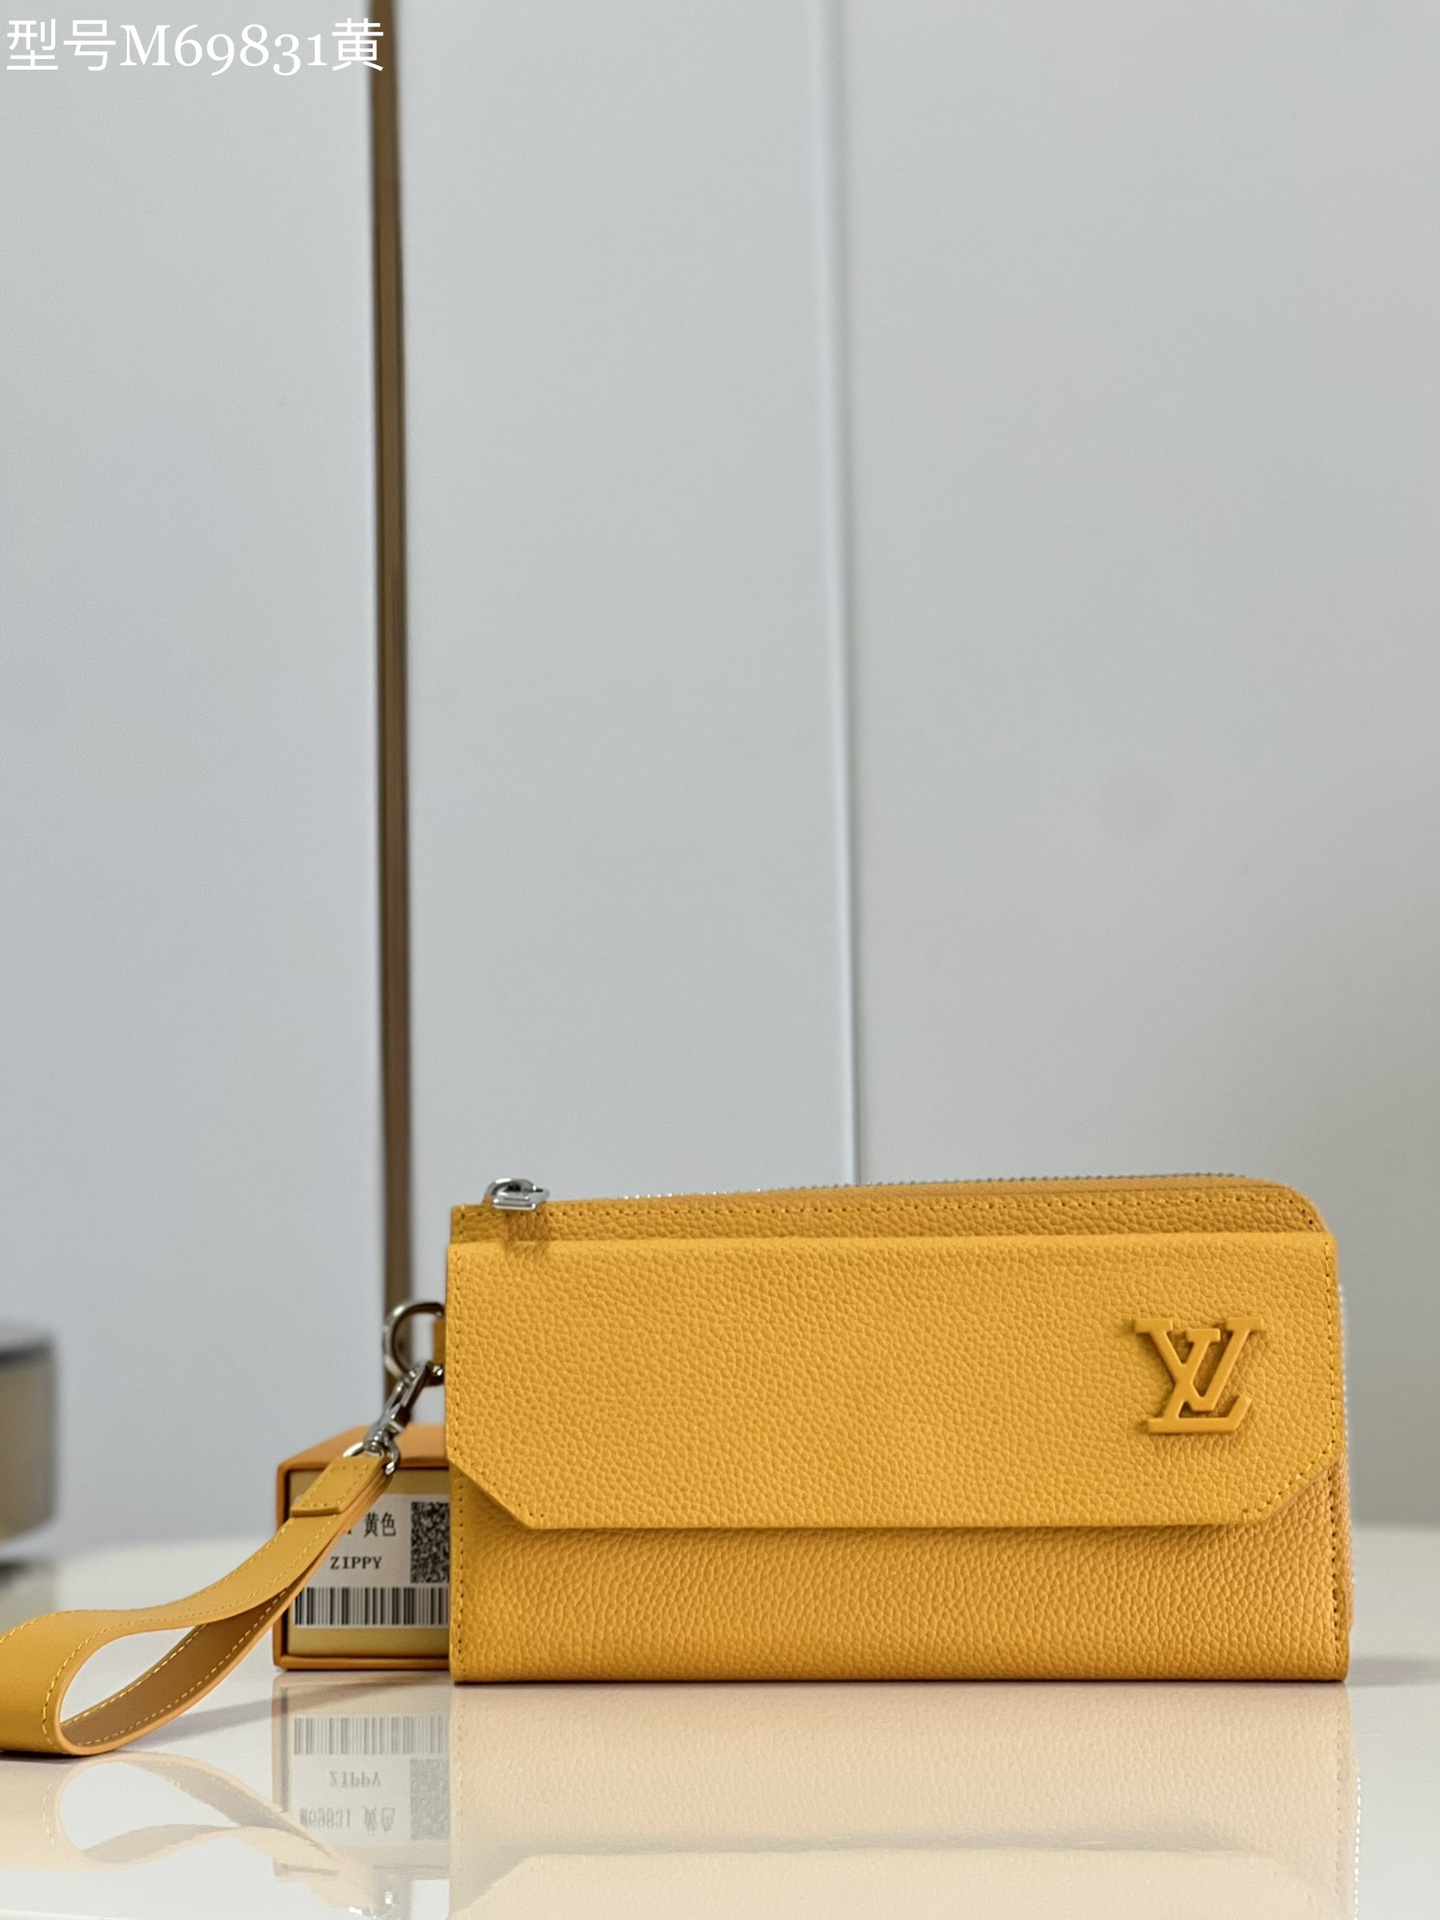 Louis Vuitton Wallet Black Yellow Men Calfskin Cowhide M69831